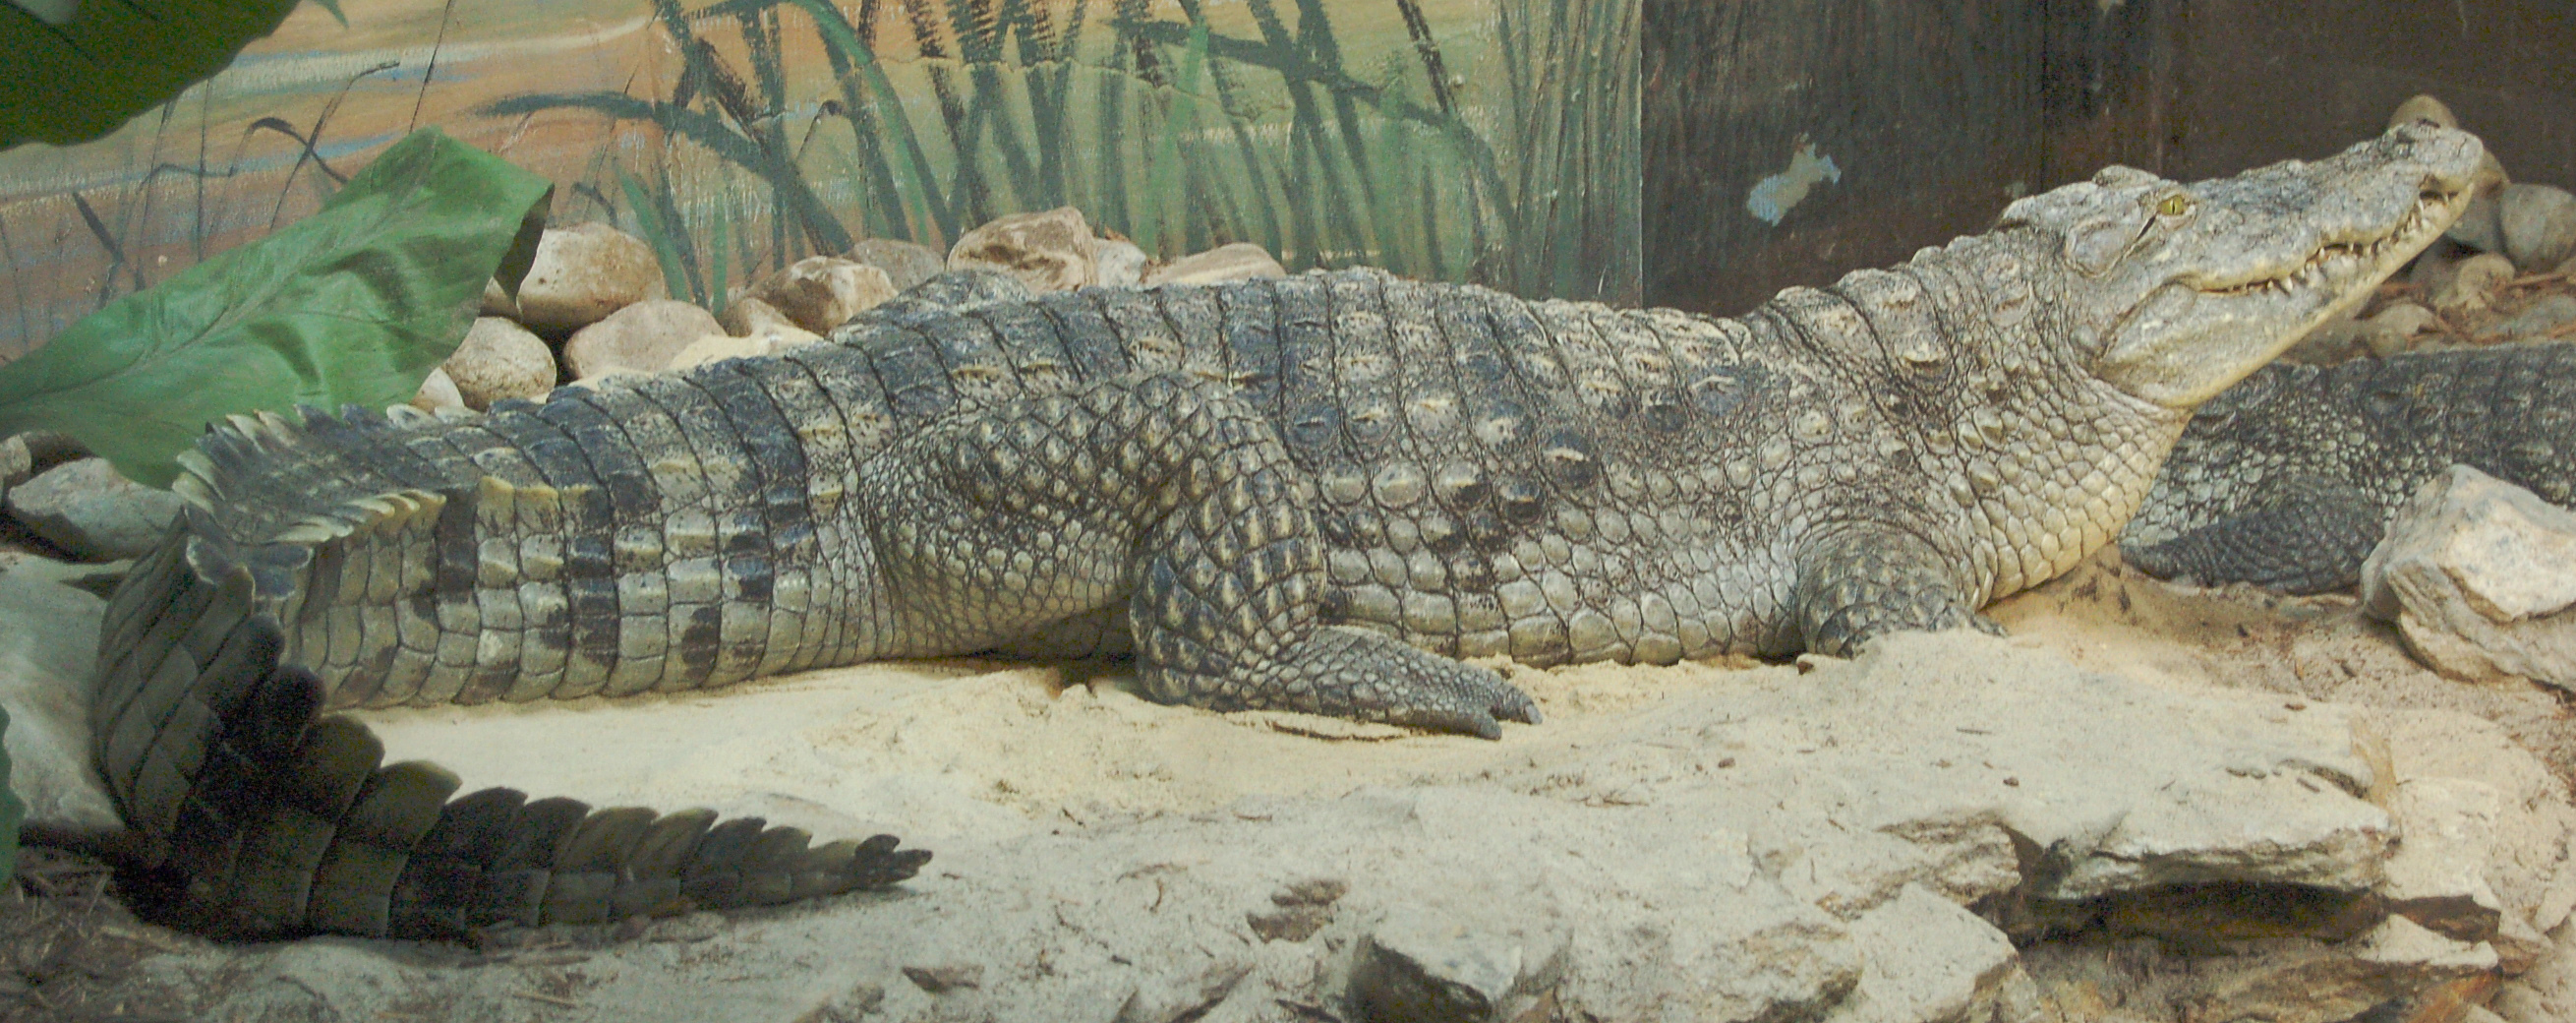 Crocodiles Nile